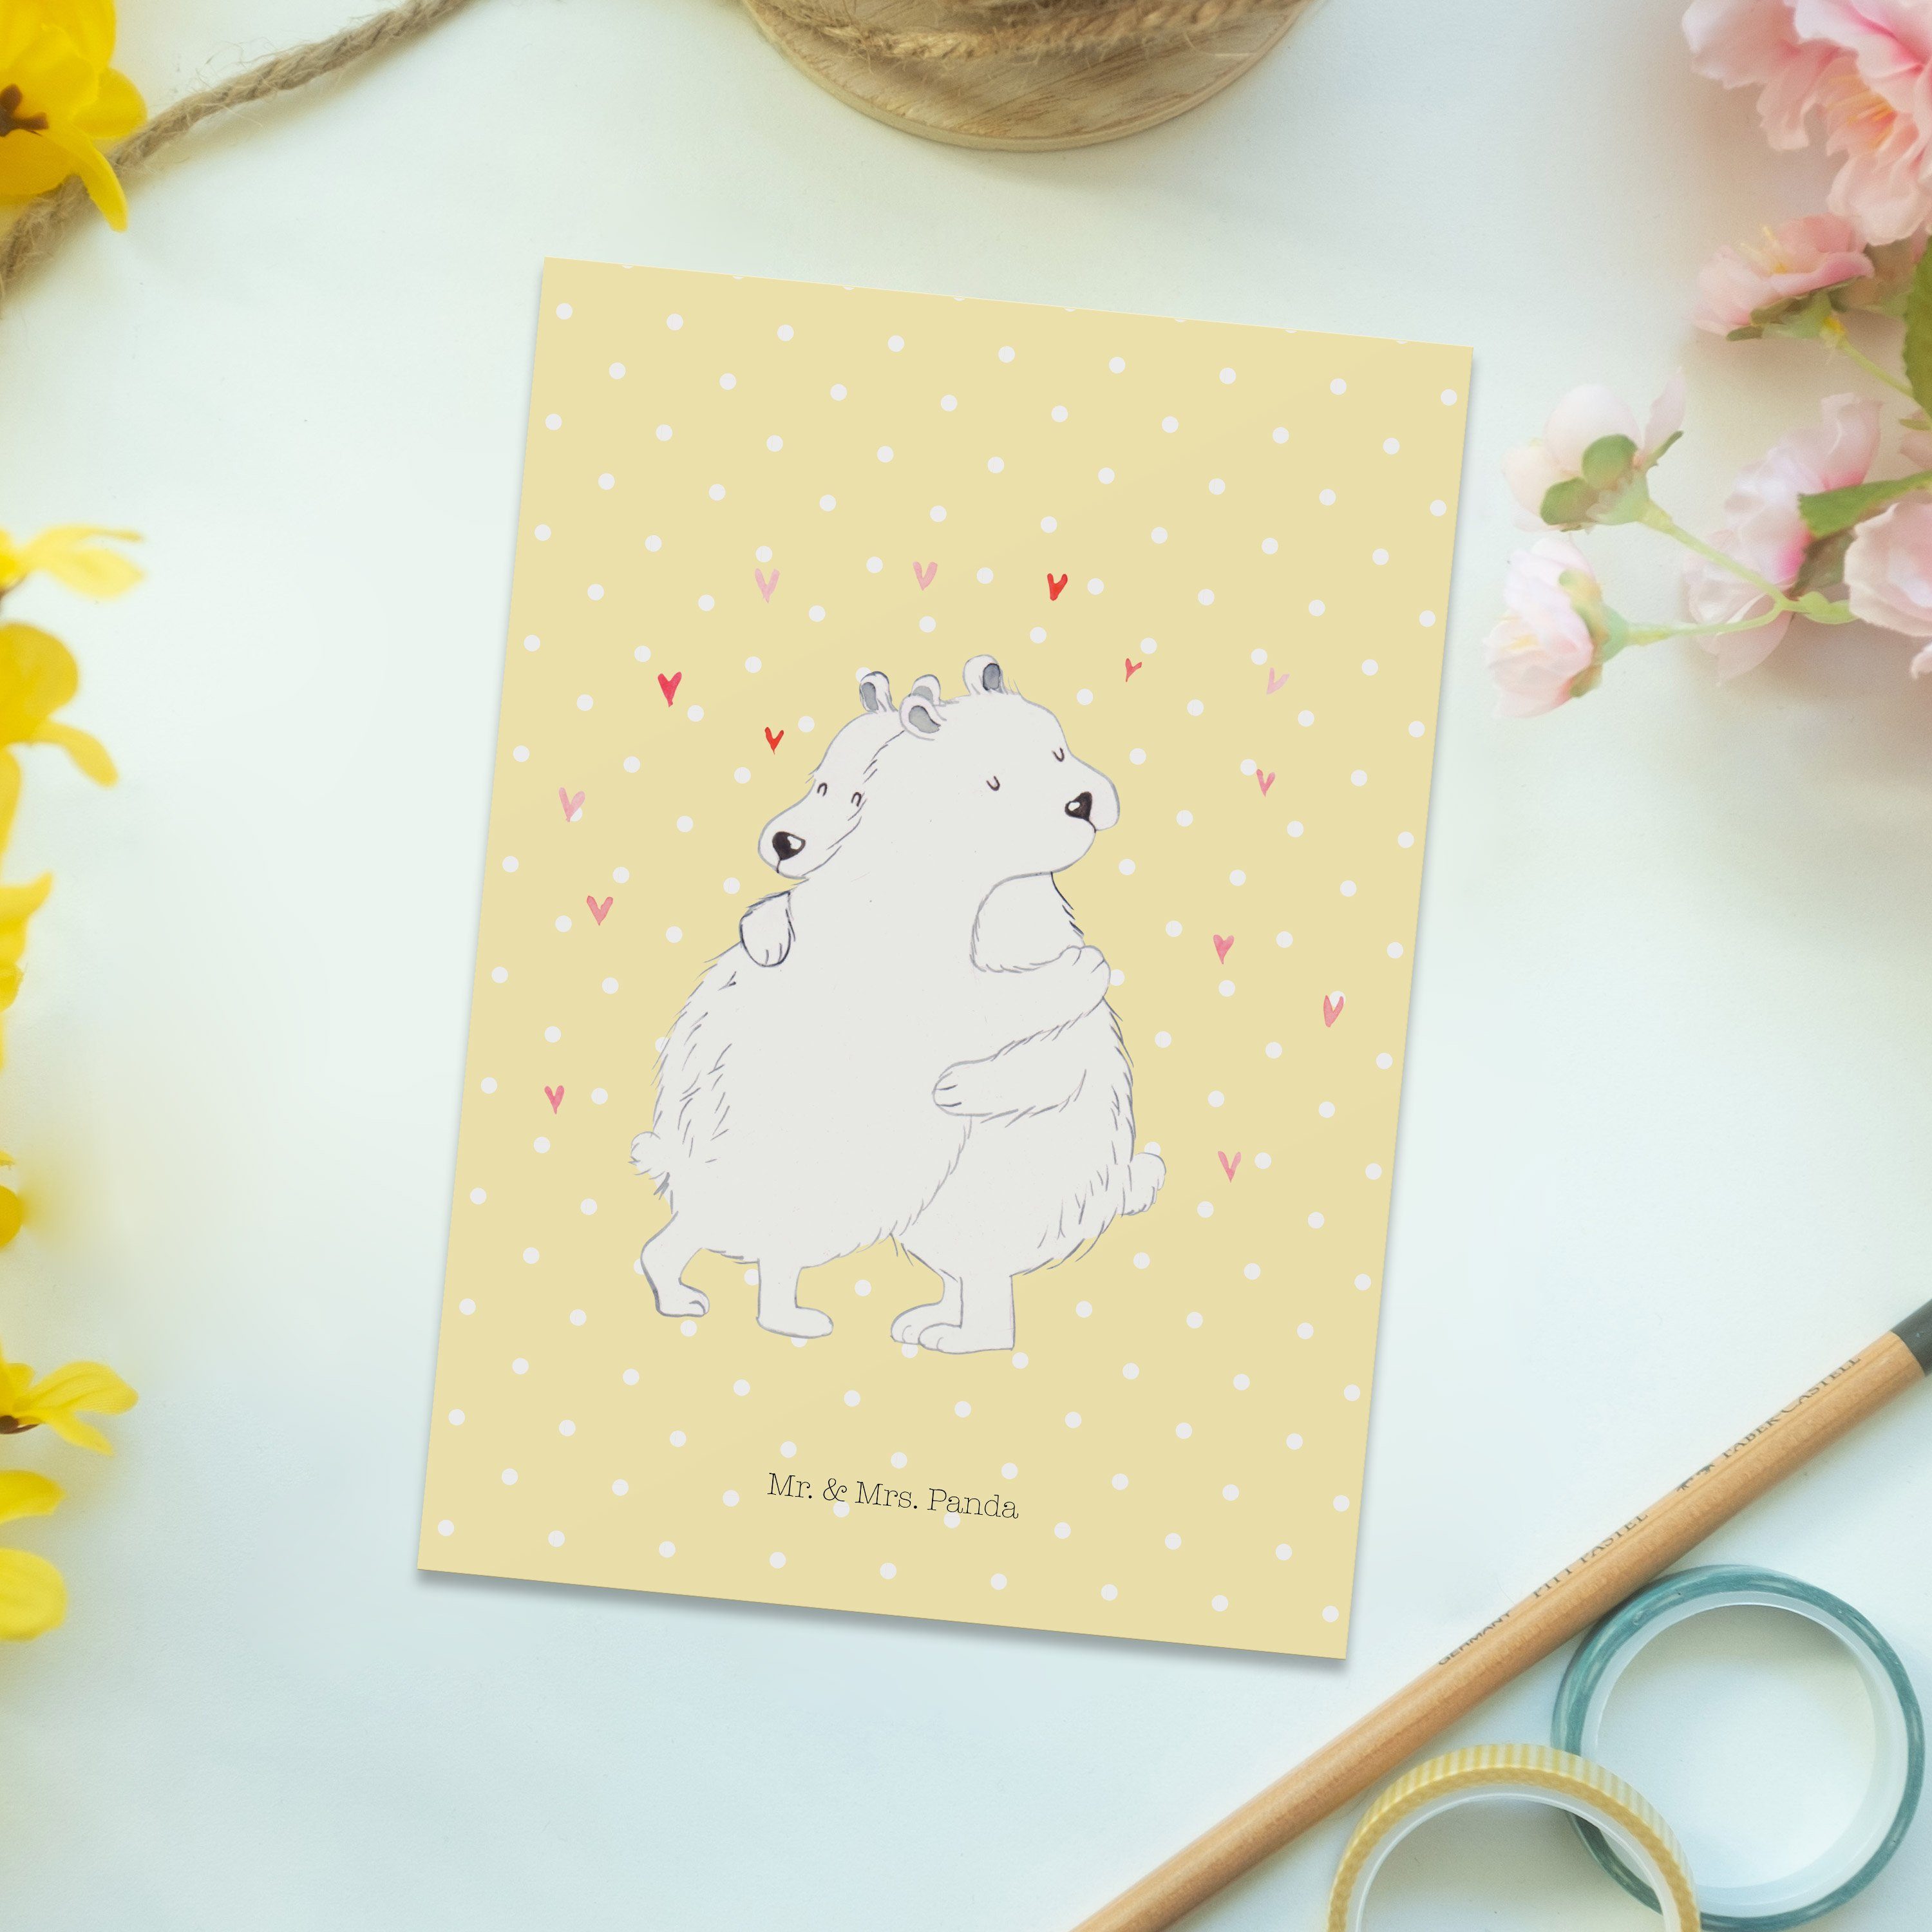 - & Grußkarte, Geschenk, Mr. Gelb - Pastell Umarmen Einladungskarte Eisbär Panda Mrs. Postkarte